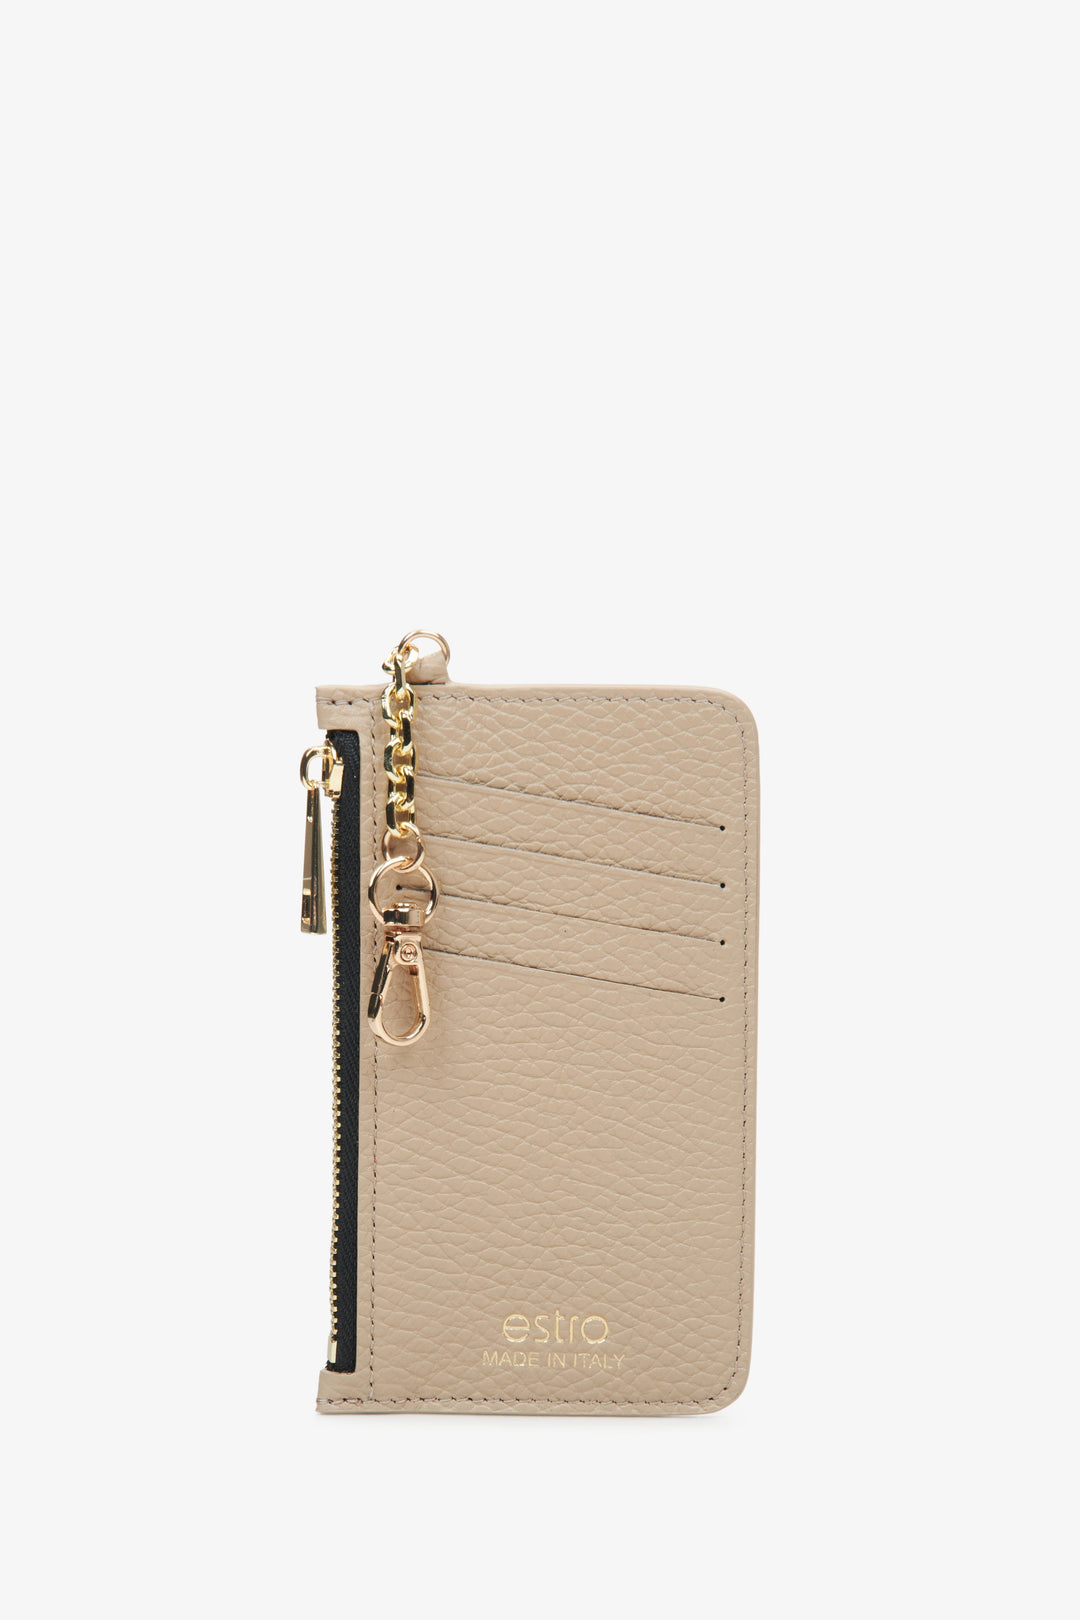 Women's Compact Beige Wallet made of Genuine Italian Leather Estro ER00115020.